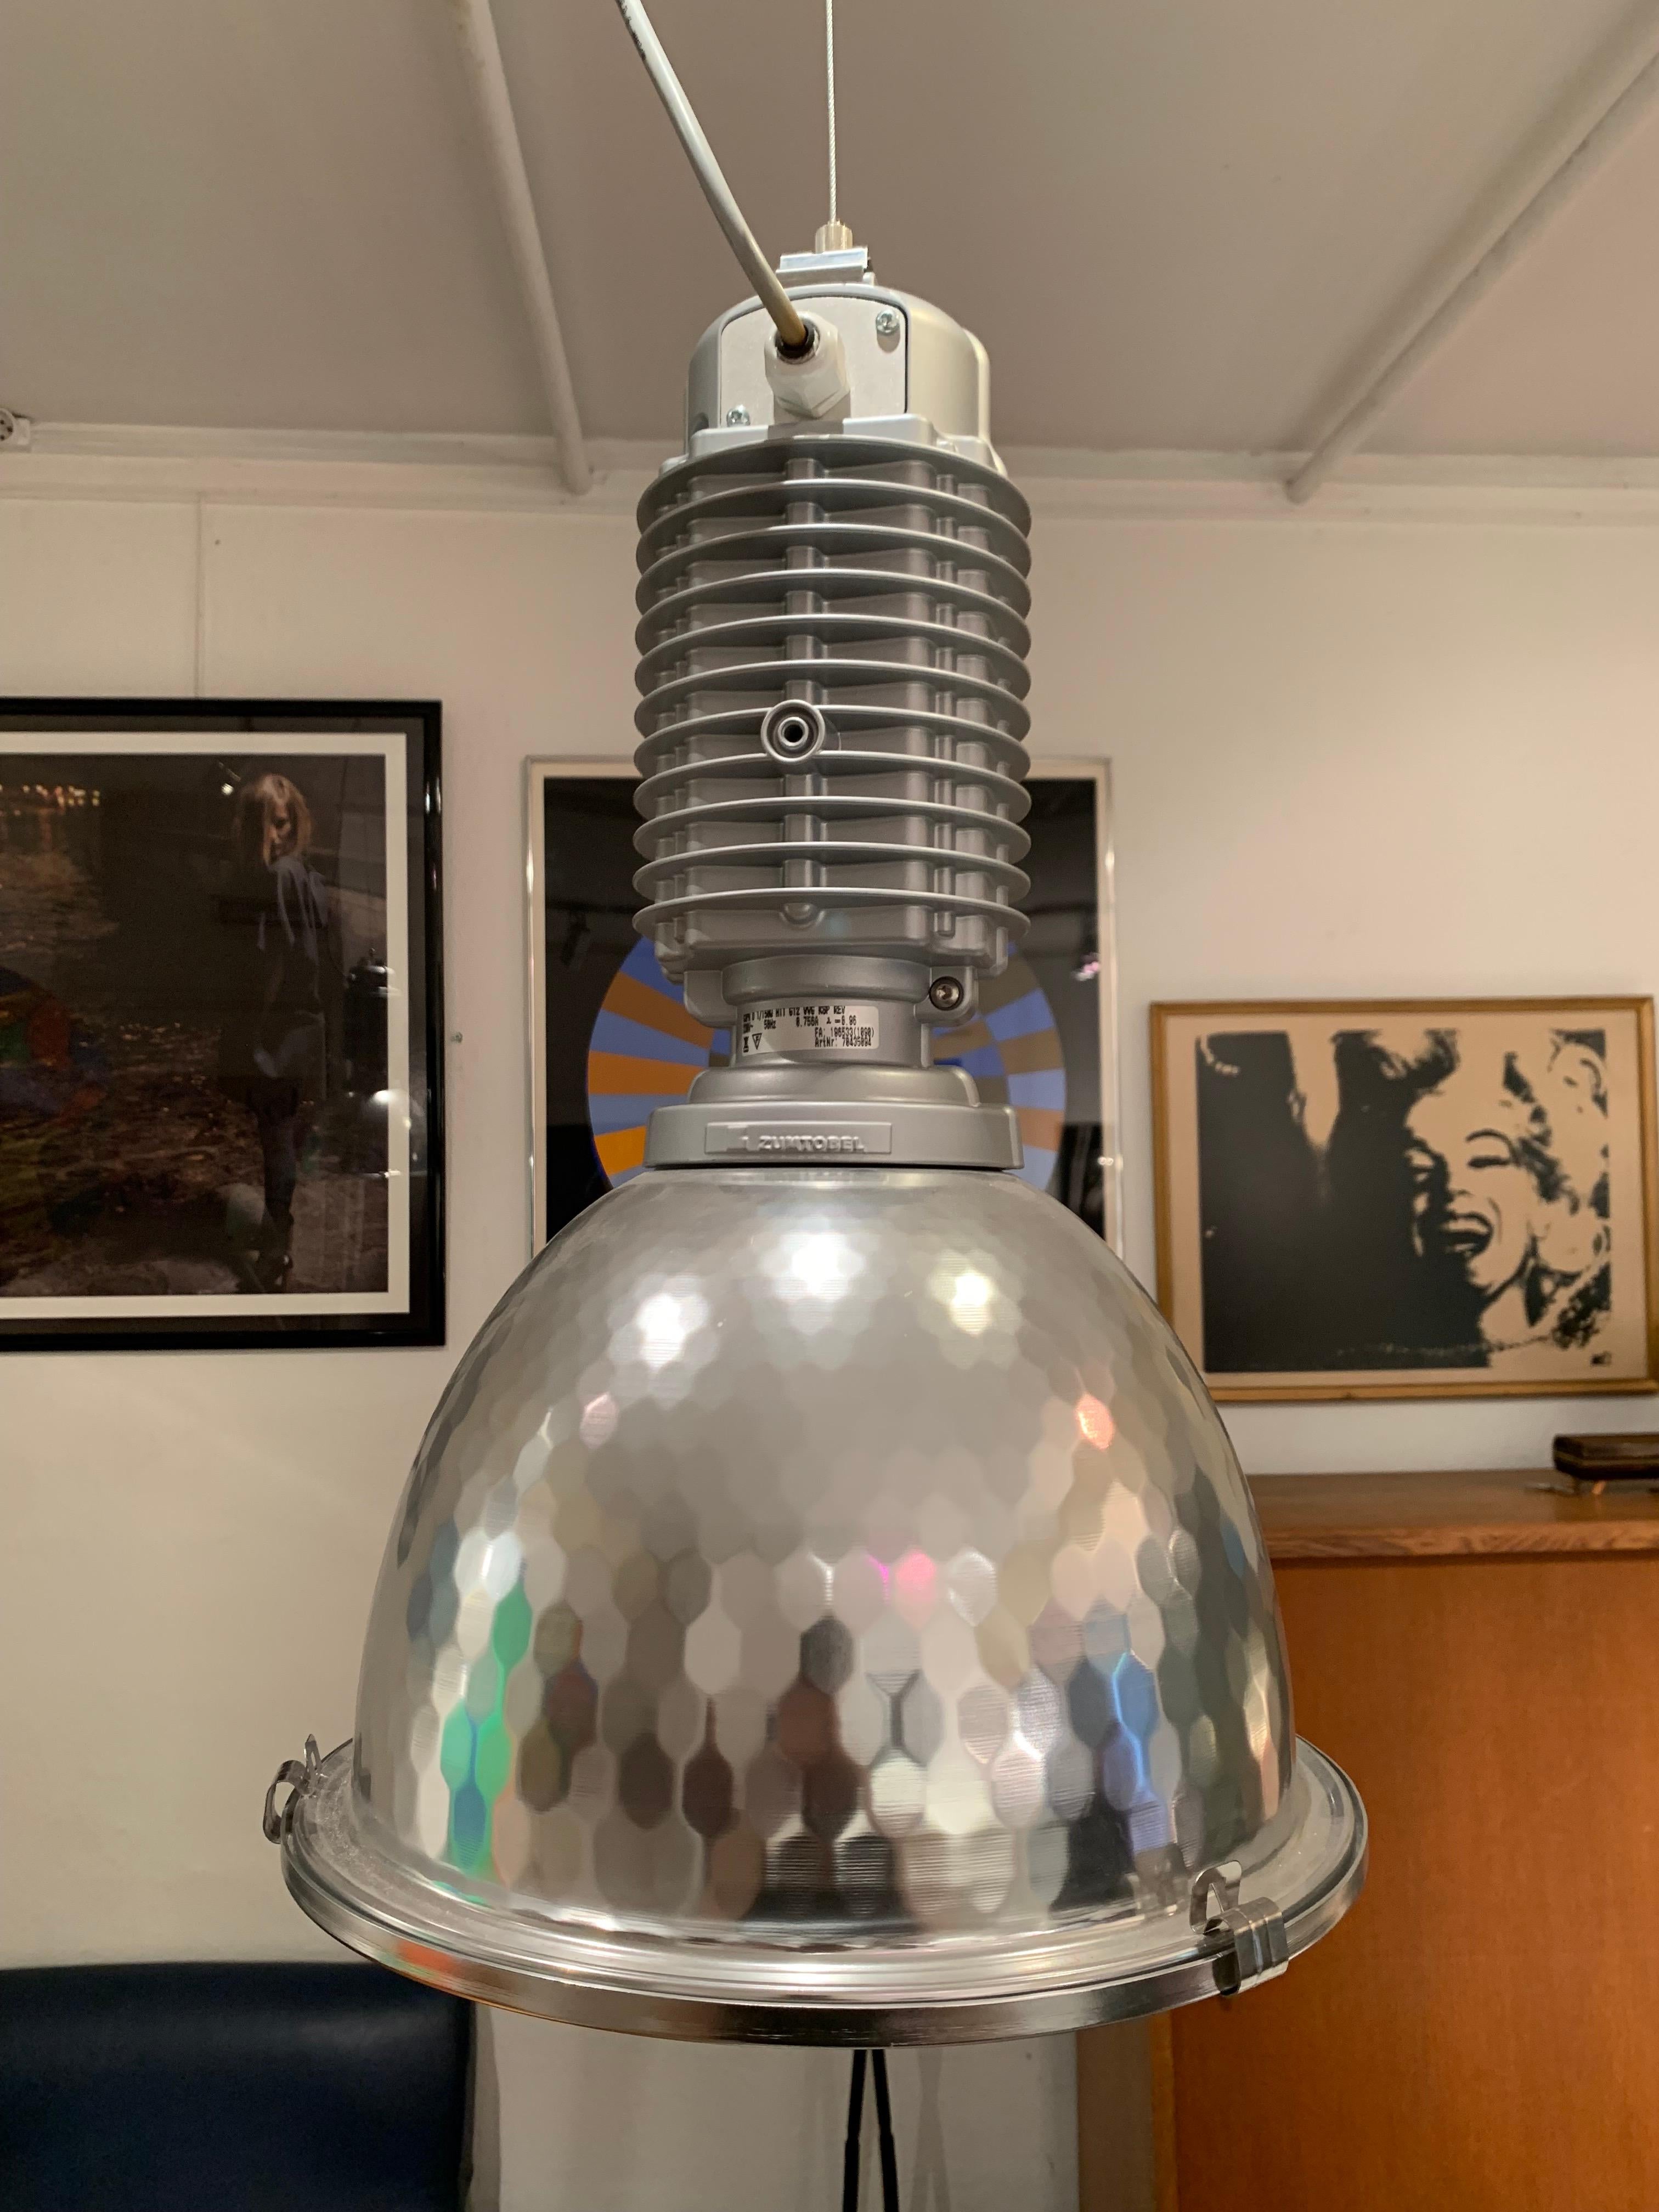 Zumtobel industrial pendant light
New LED version
Dimensions: Minimum height 55 x D35
Circa 2019.